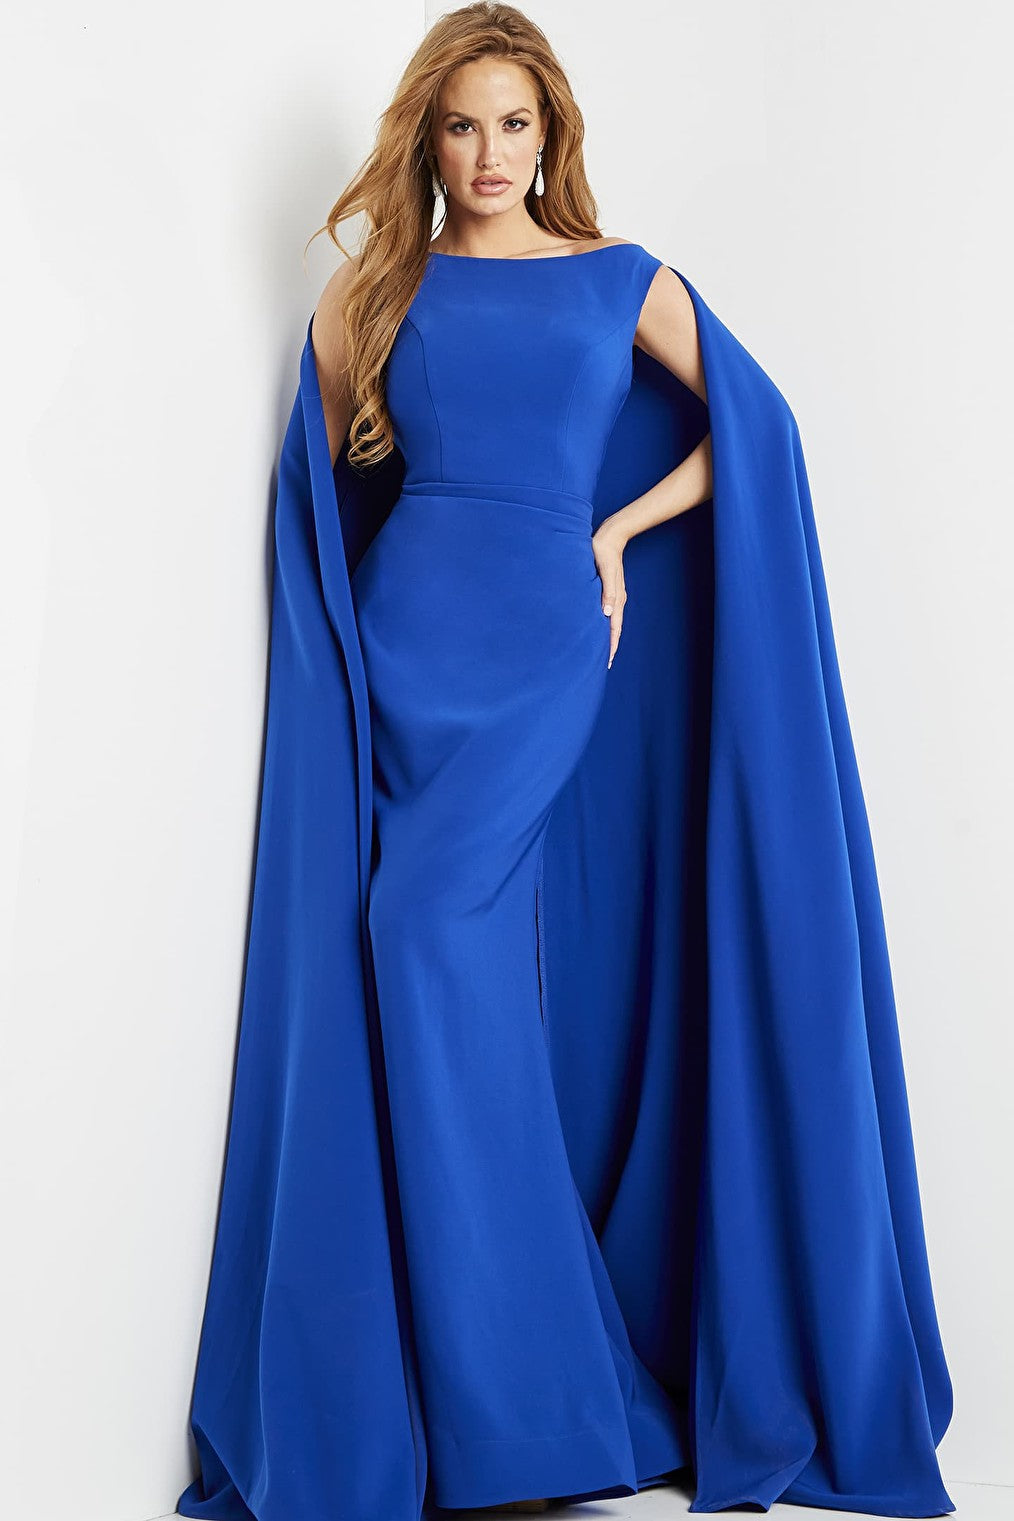 Floor length royal blue evening gown 09755